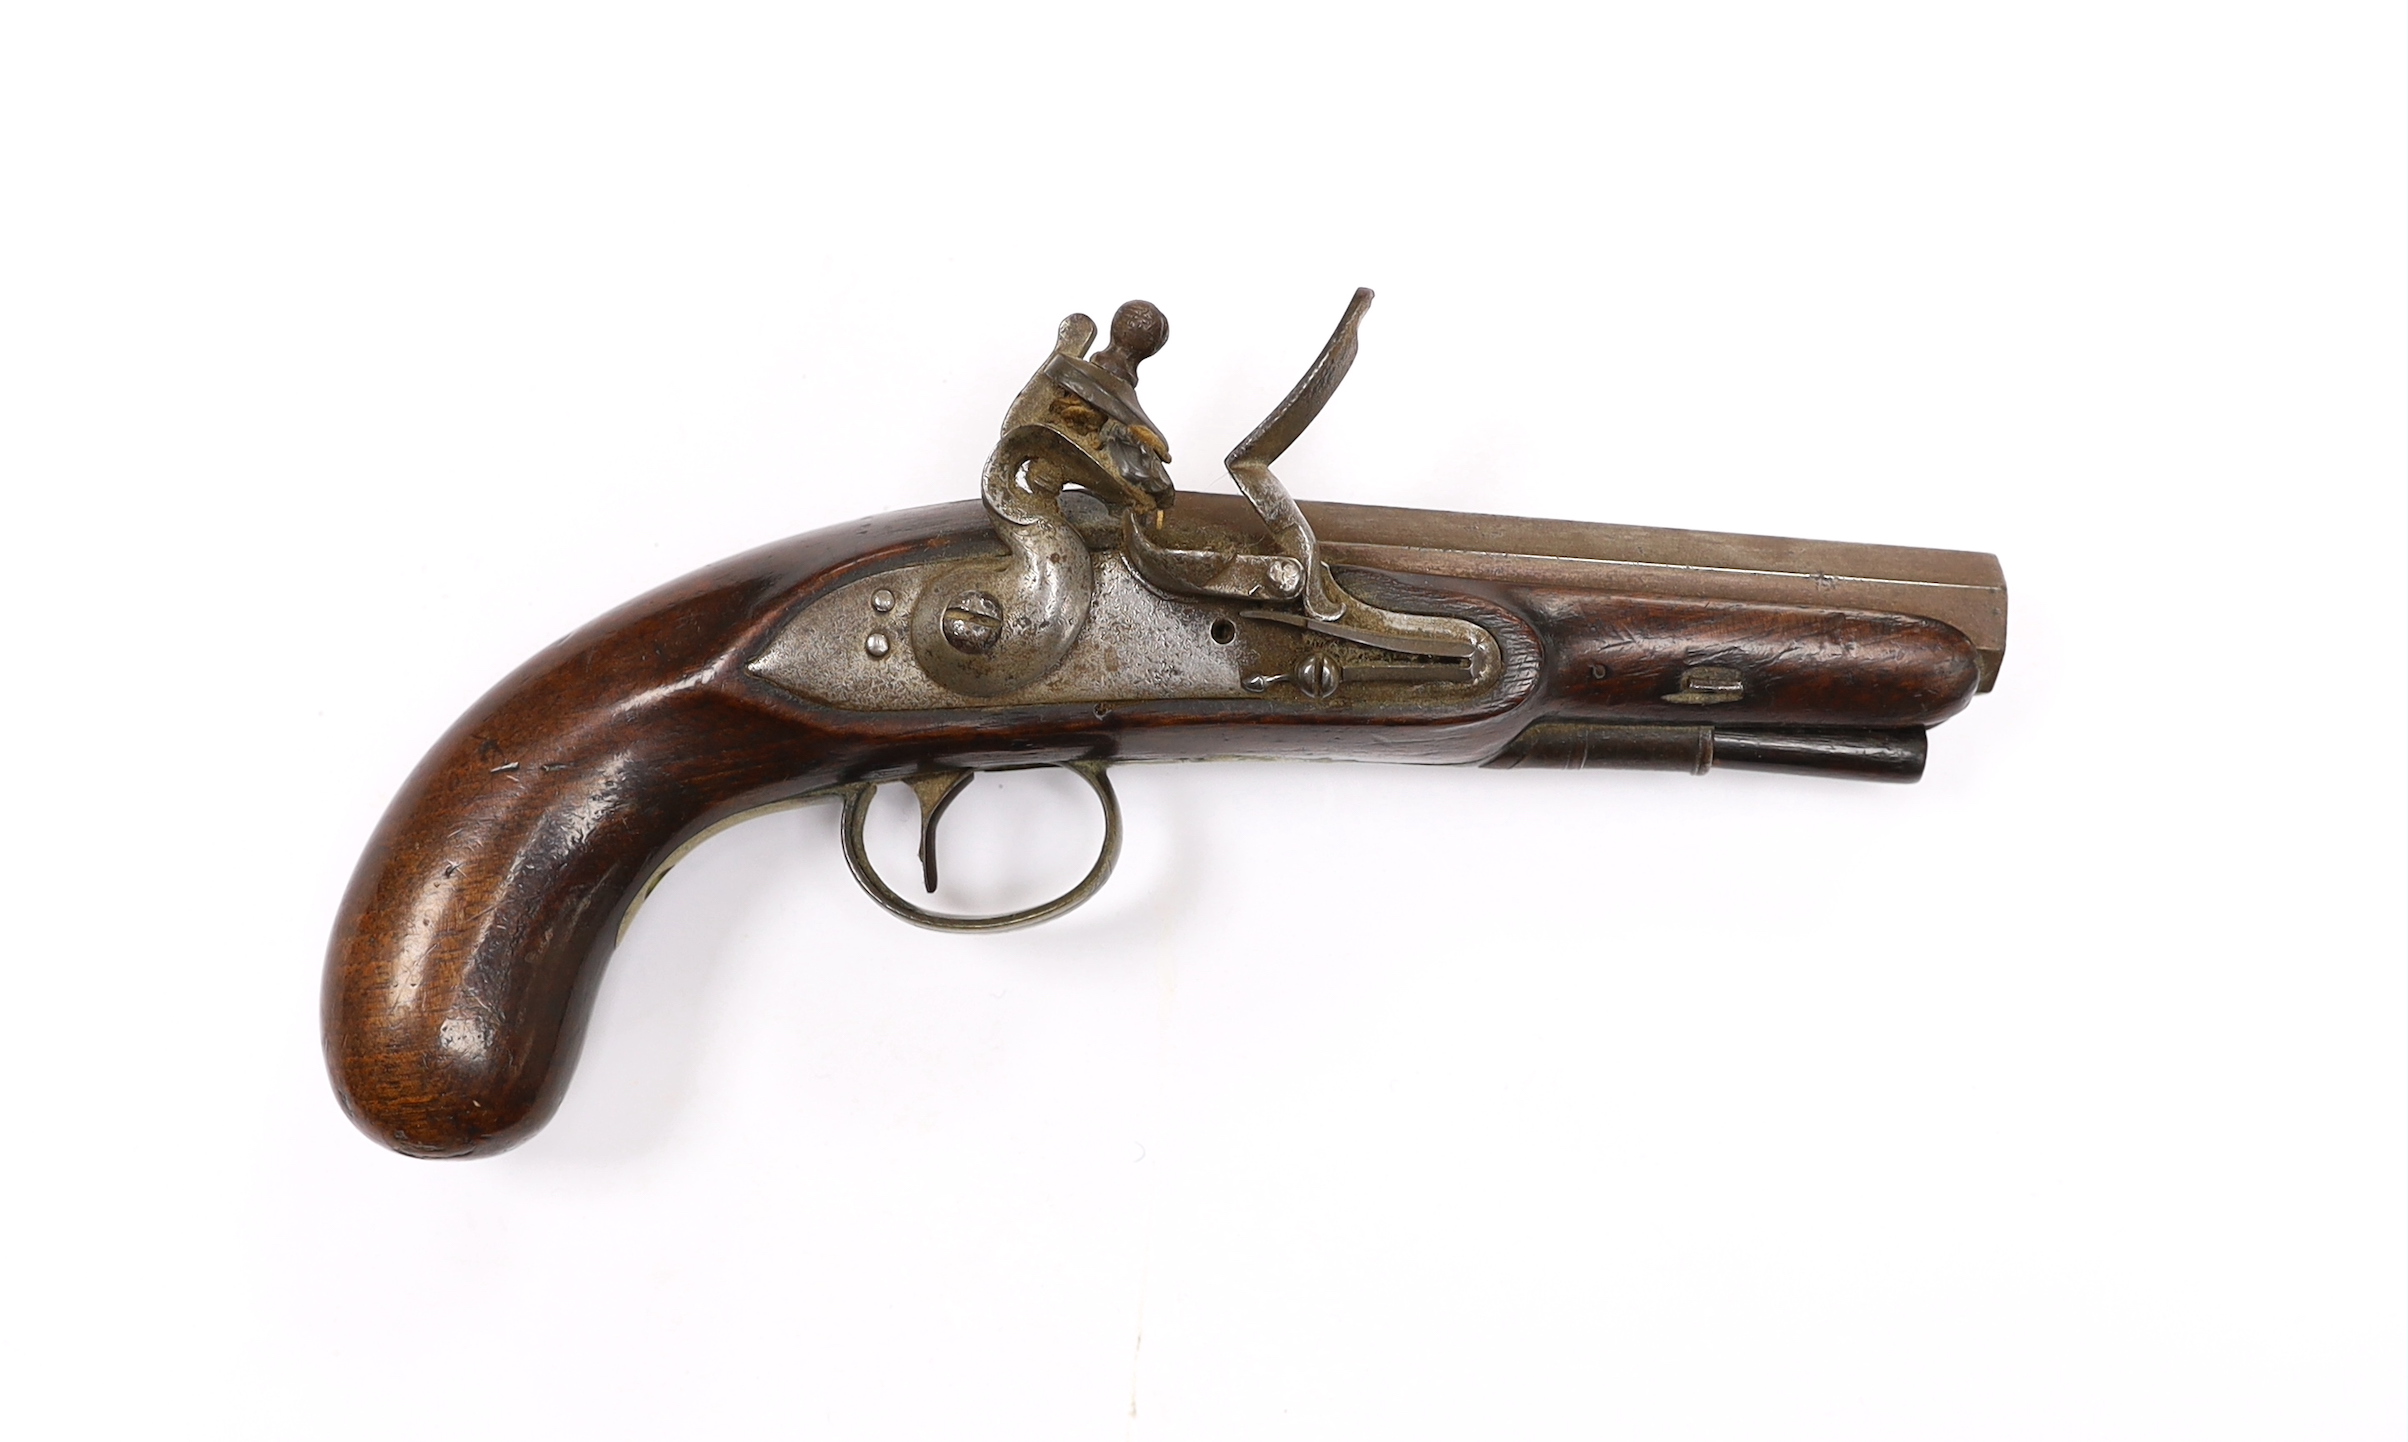 A flintlock overcoat pistol c.1820, octagonal barrel with gold inlaid breach line and engraved trigger guard, barrel 11.3cm